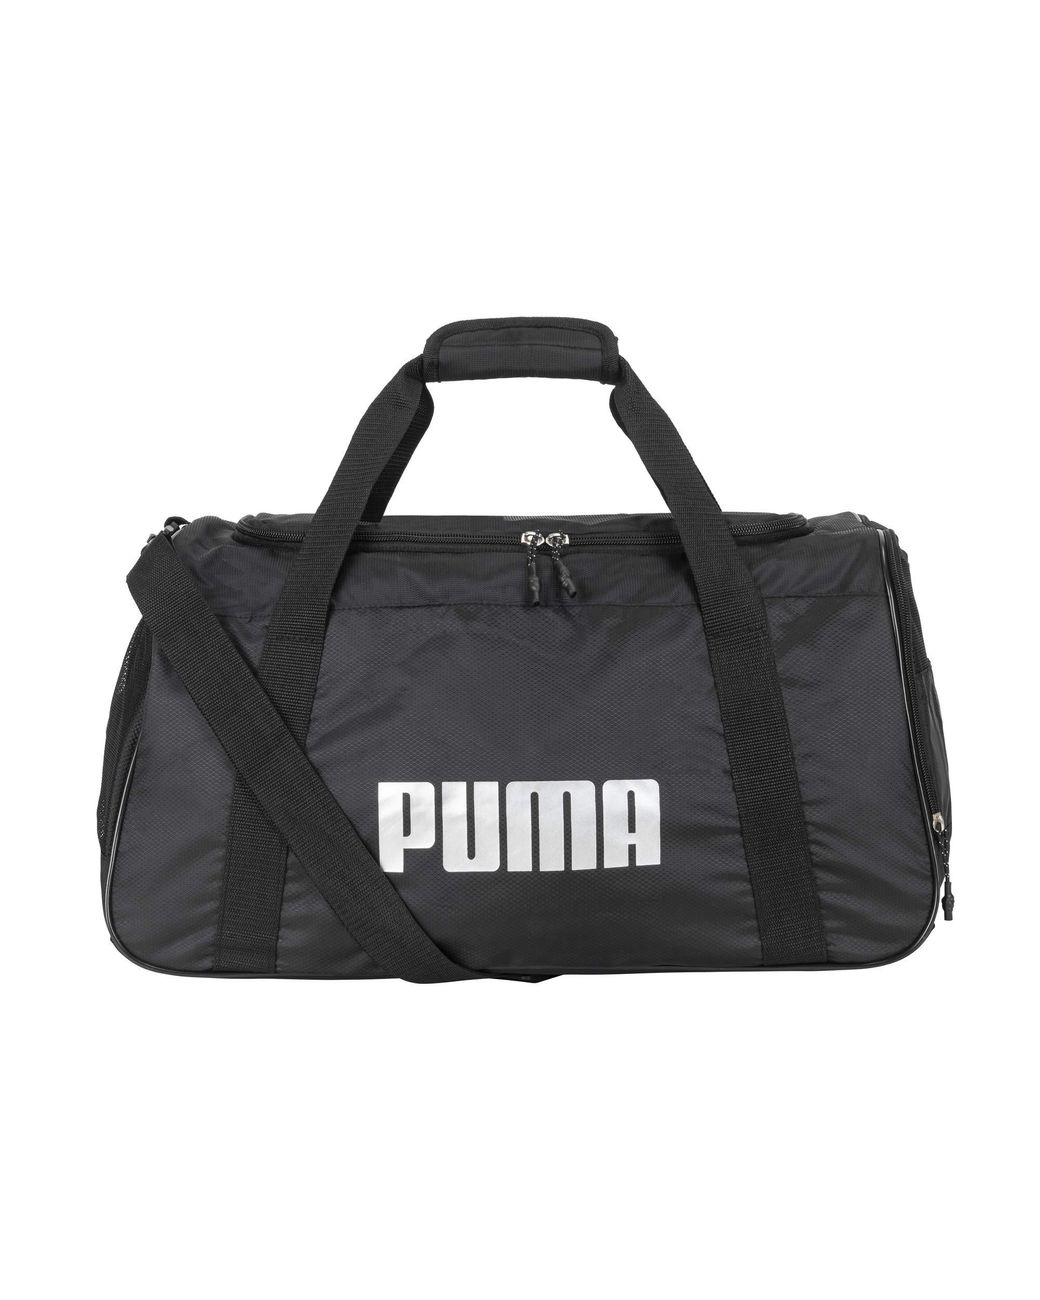 PUMA Unisex Adult Evercat Foundation Duffel Bags in Black/Silver (Black)  for Men - Save 19% | Lyst